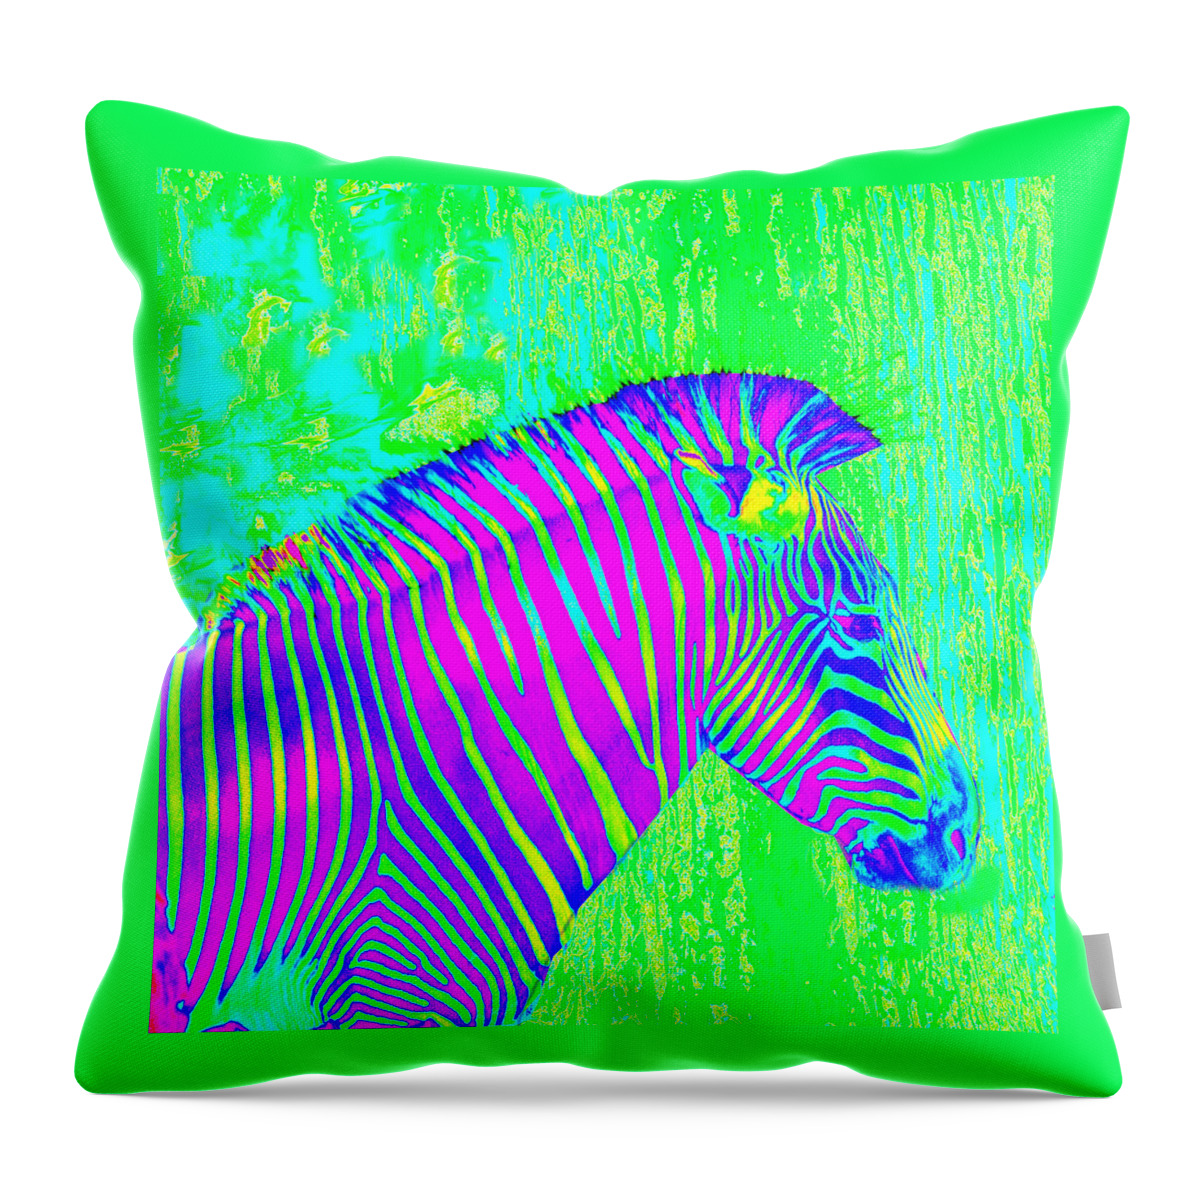 Zebra Throw Pillow featuring the painting Neon Zebra 2 by Jane Schnetlage